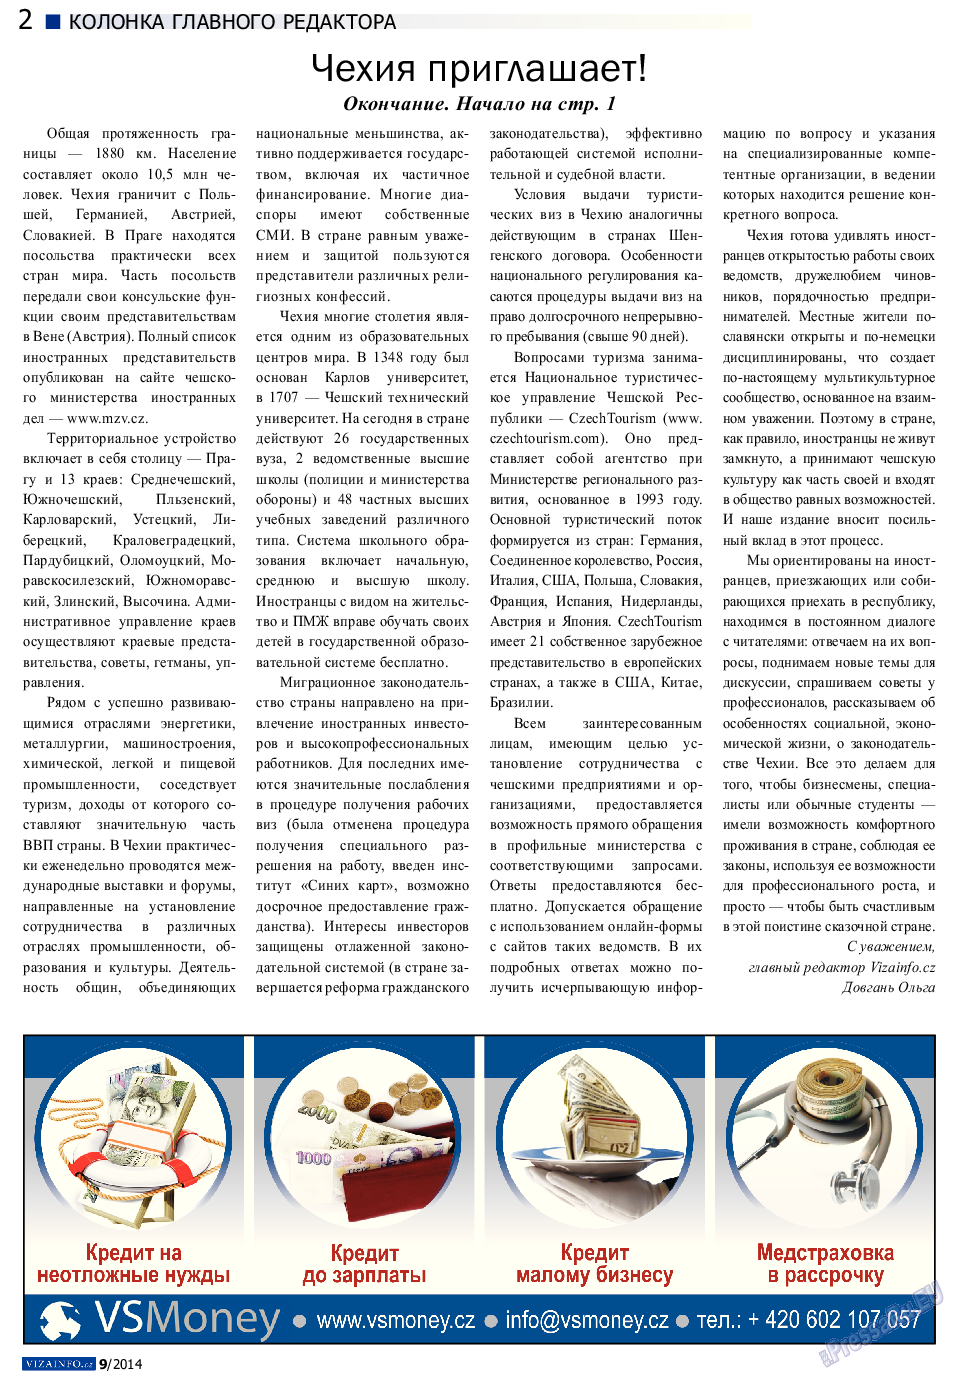 Vizainfo.cz, газета. 2014 №60 стр.2